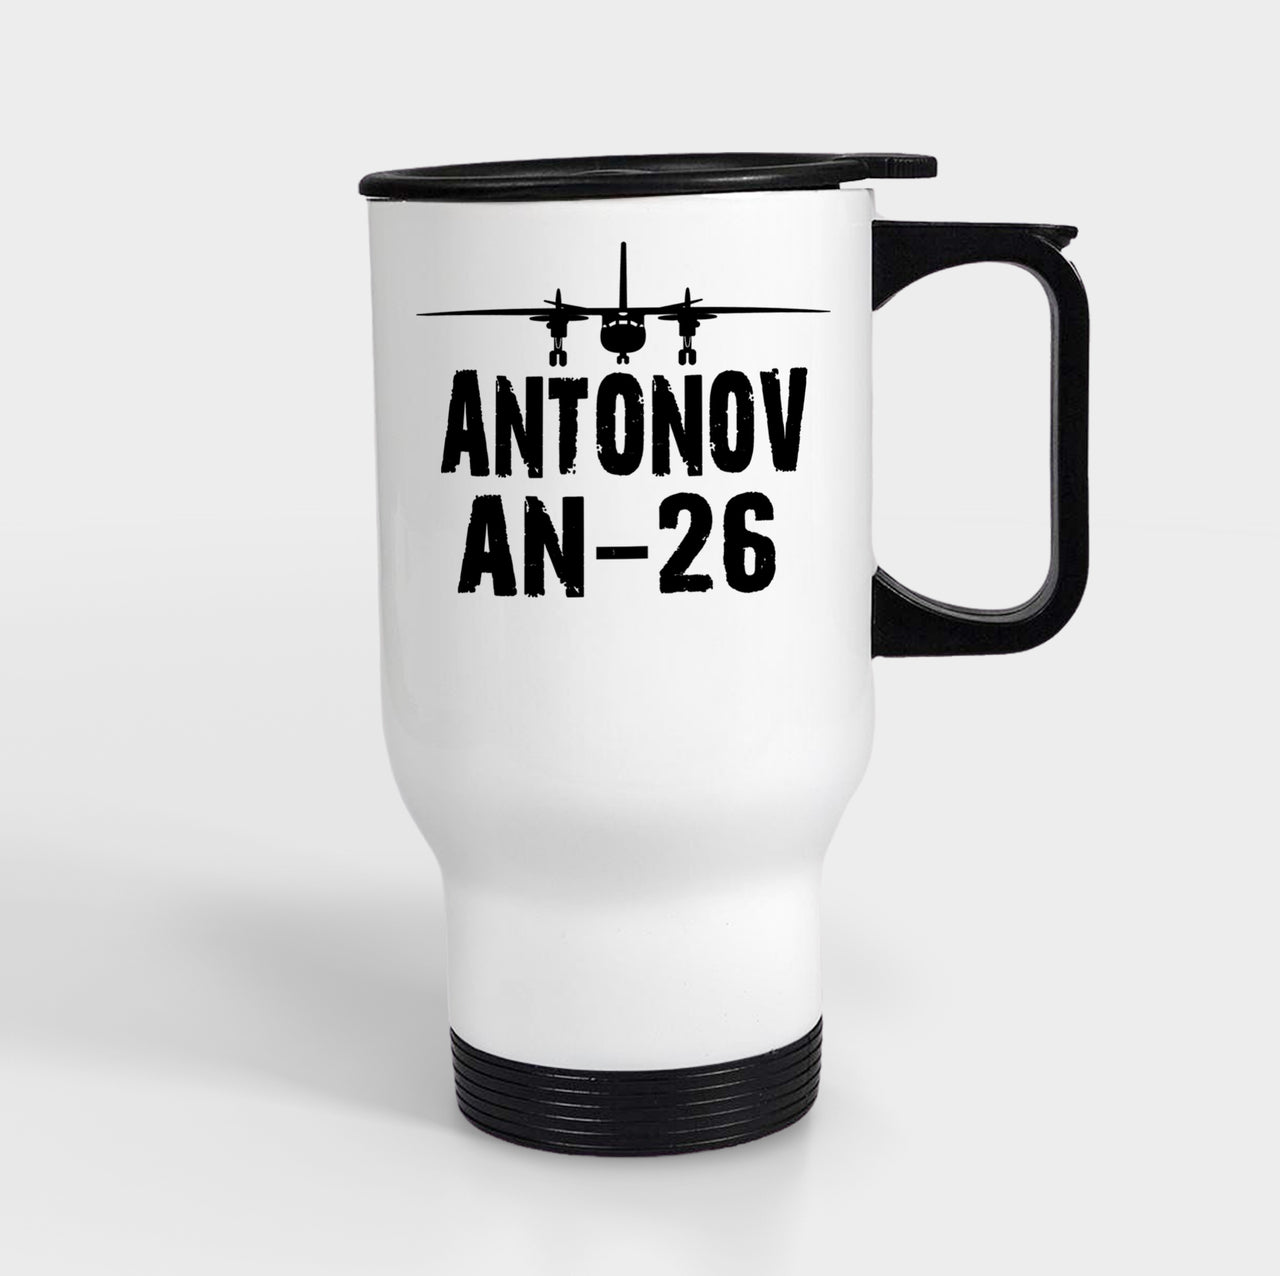 Antonov AN-26 & Plane Designed Travel Mugs (With Holder)